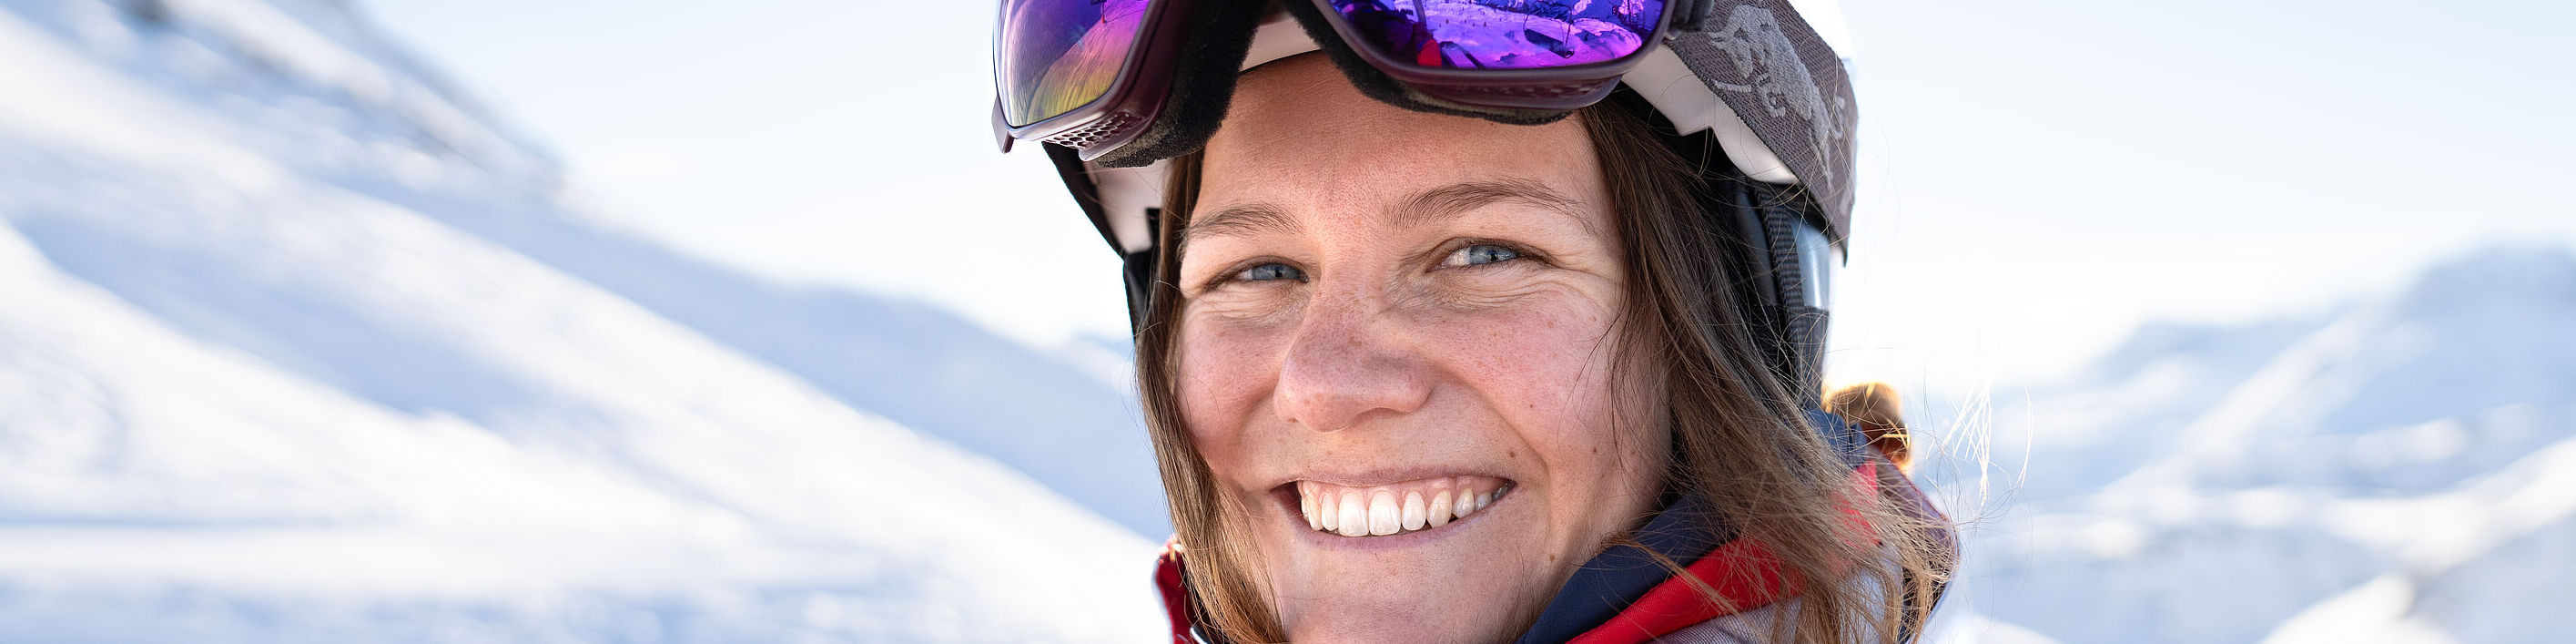 Skilehrerin Lisa sitzt lächelnd im Sessellift